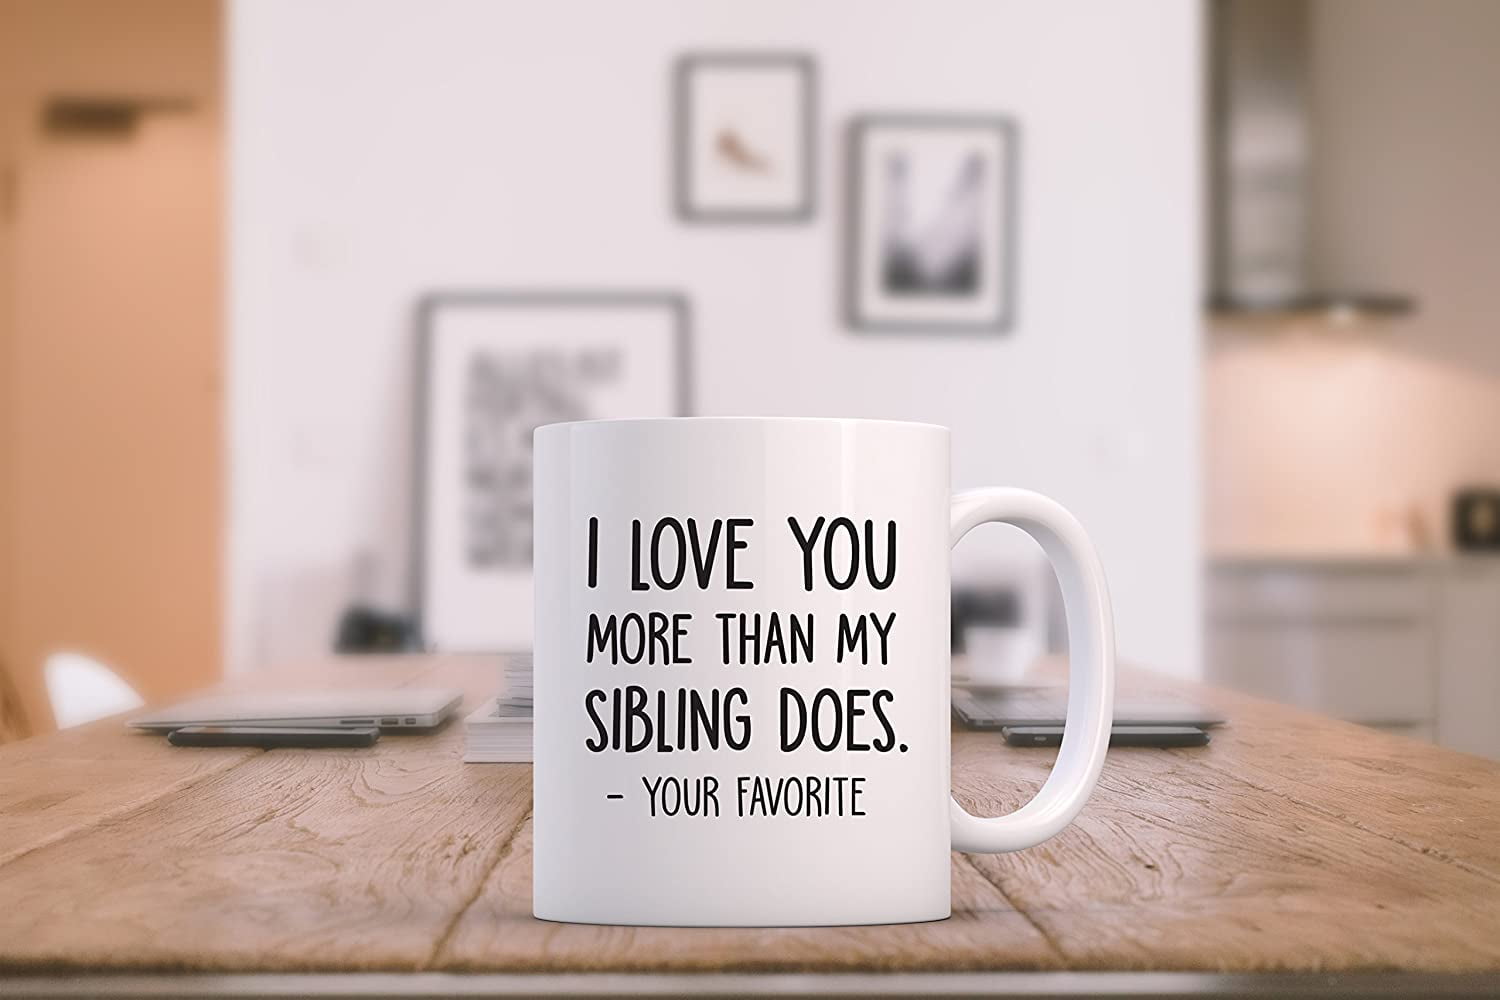 Mom, I Love You More Than Chocolate” Coffee Mug